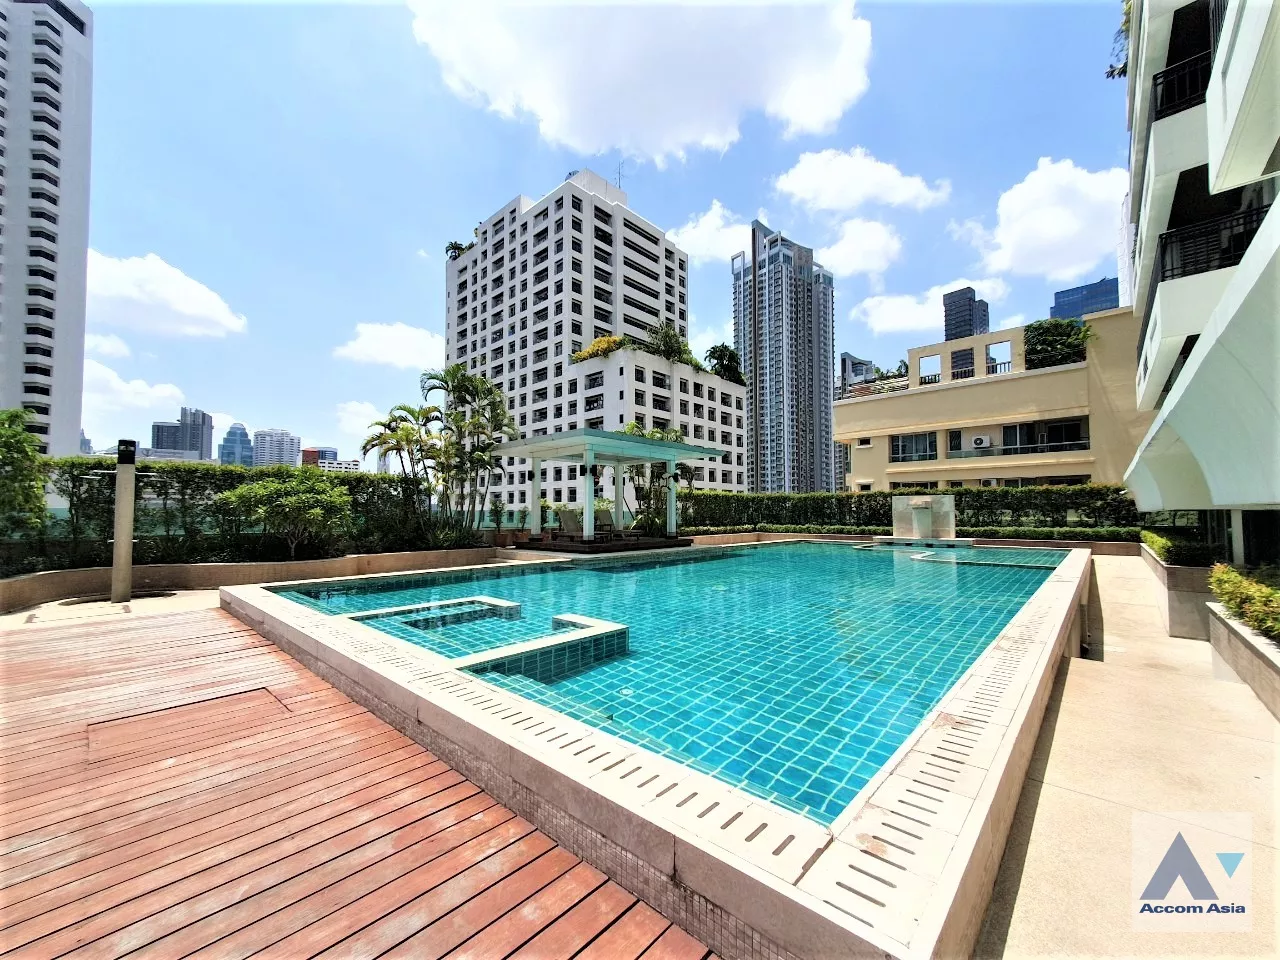  3 The Oleander Sukhumvit 11 - Condominium - Sukhumvit - Bangkok / Accomasia